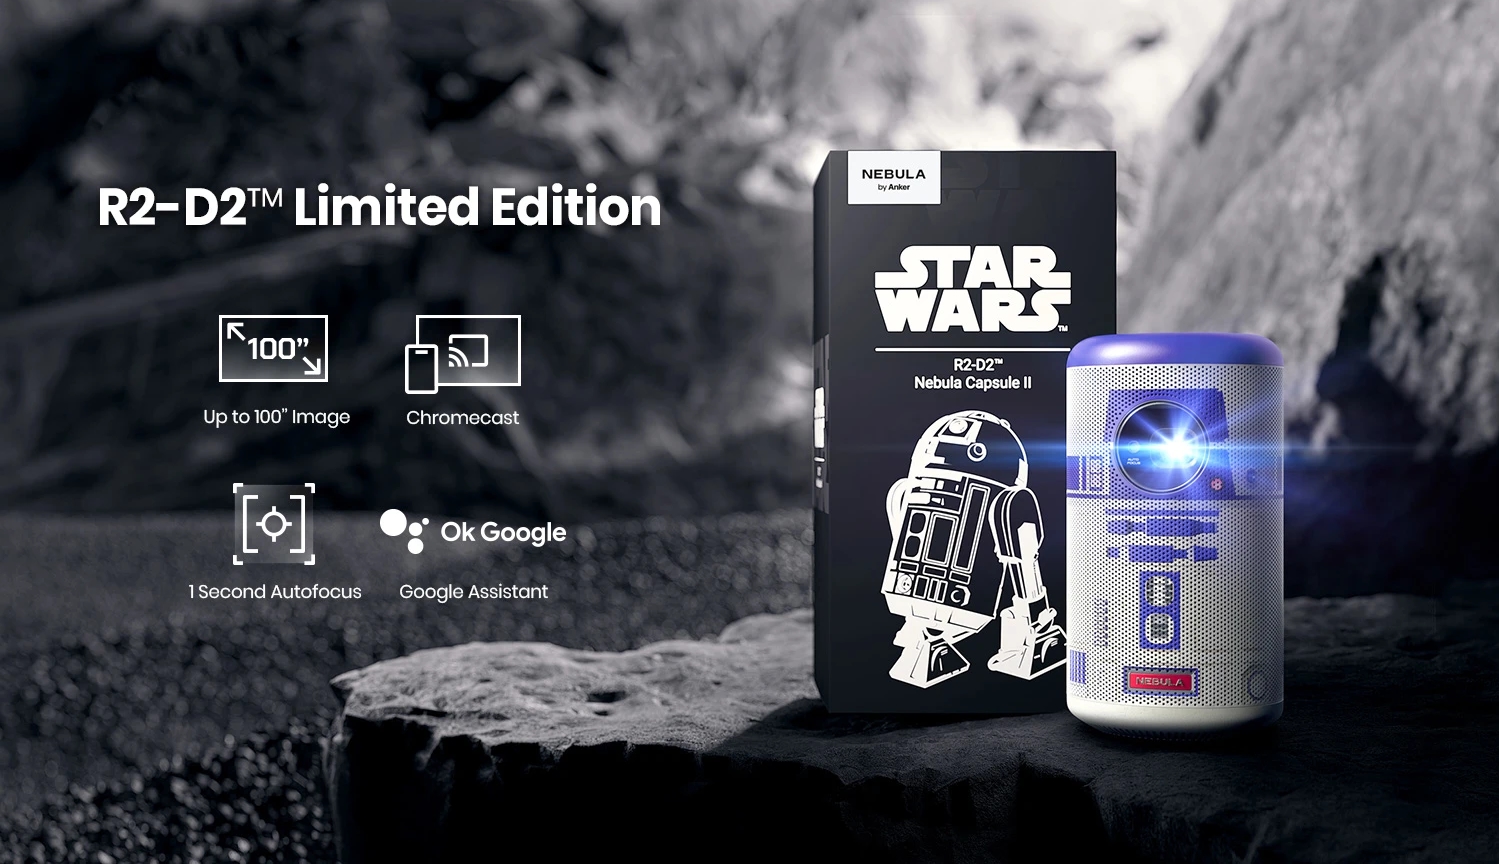 Für echte Star-Wars-Fans: Anker enthüllt eine Sonderversion des Nebula Capsule II Projektors in den Farben des R2-D2-Droiden